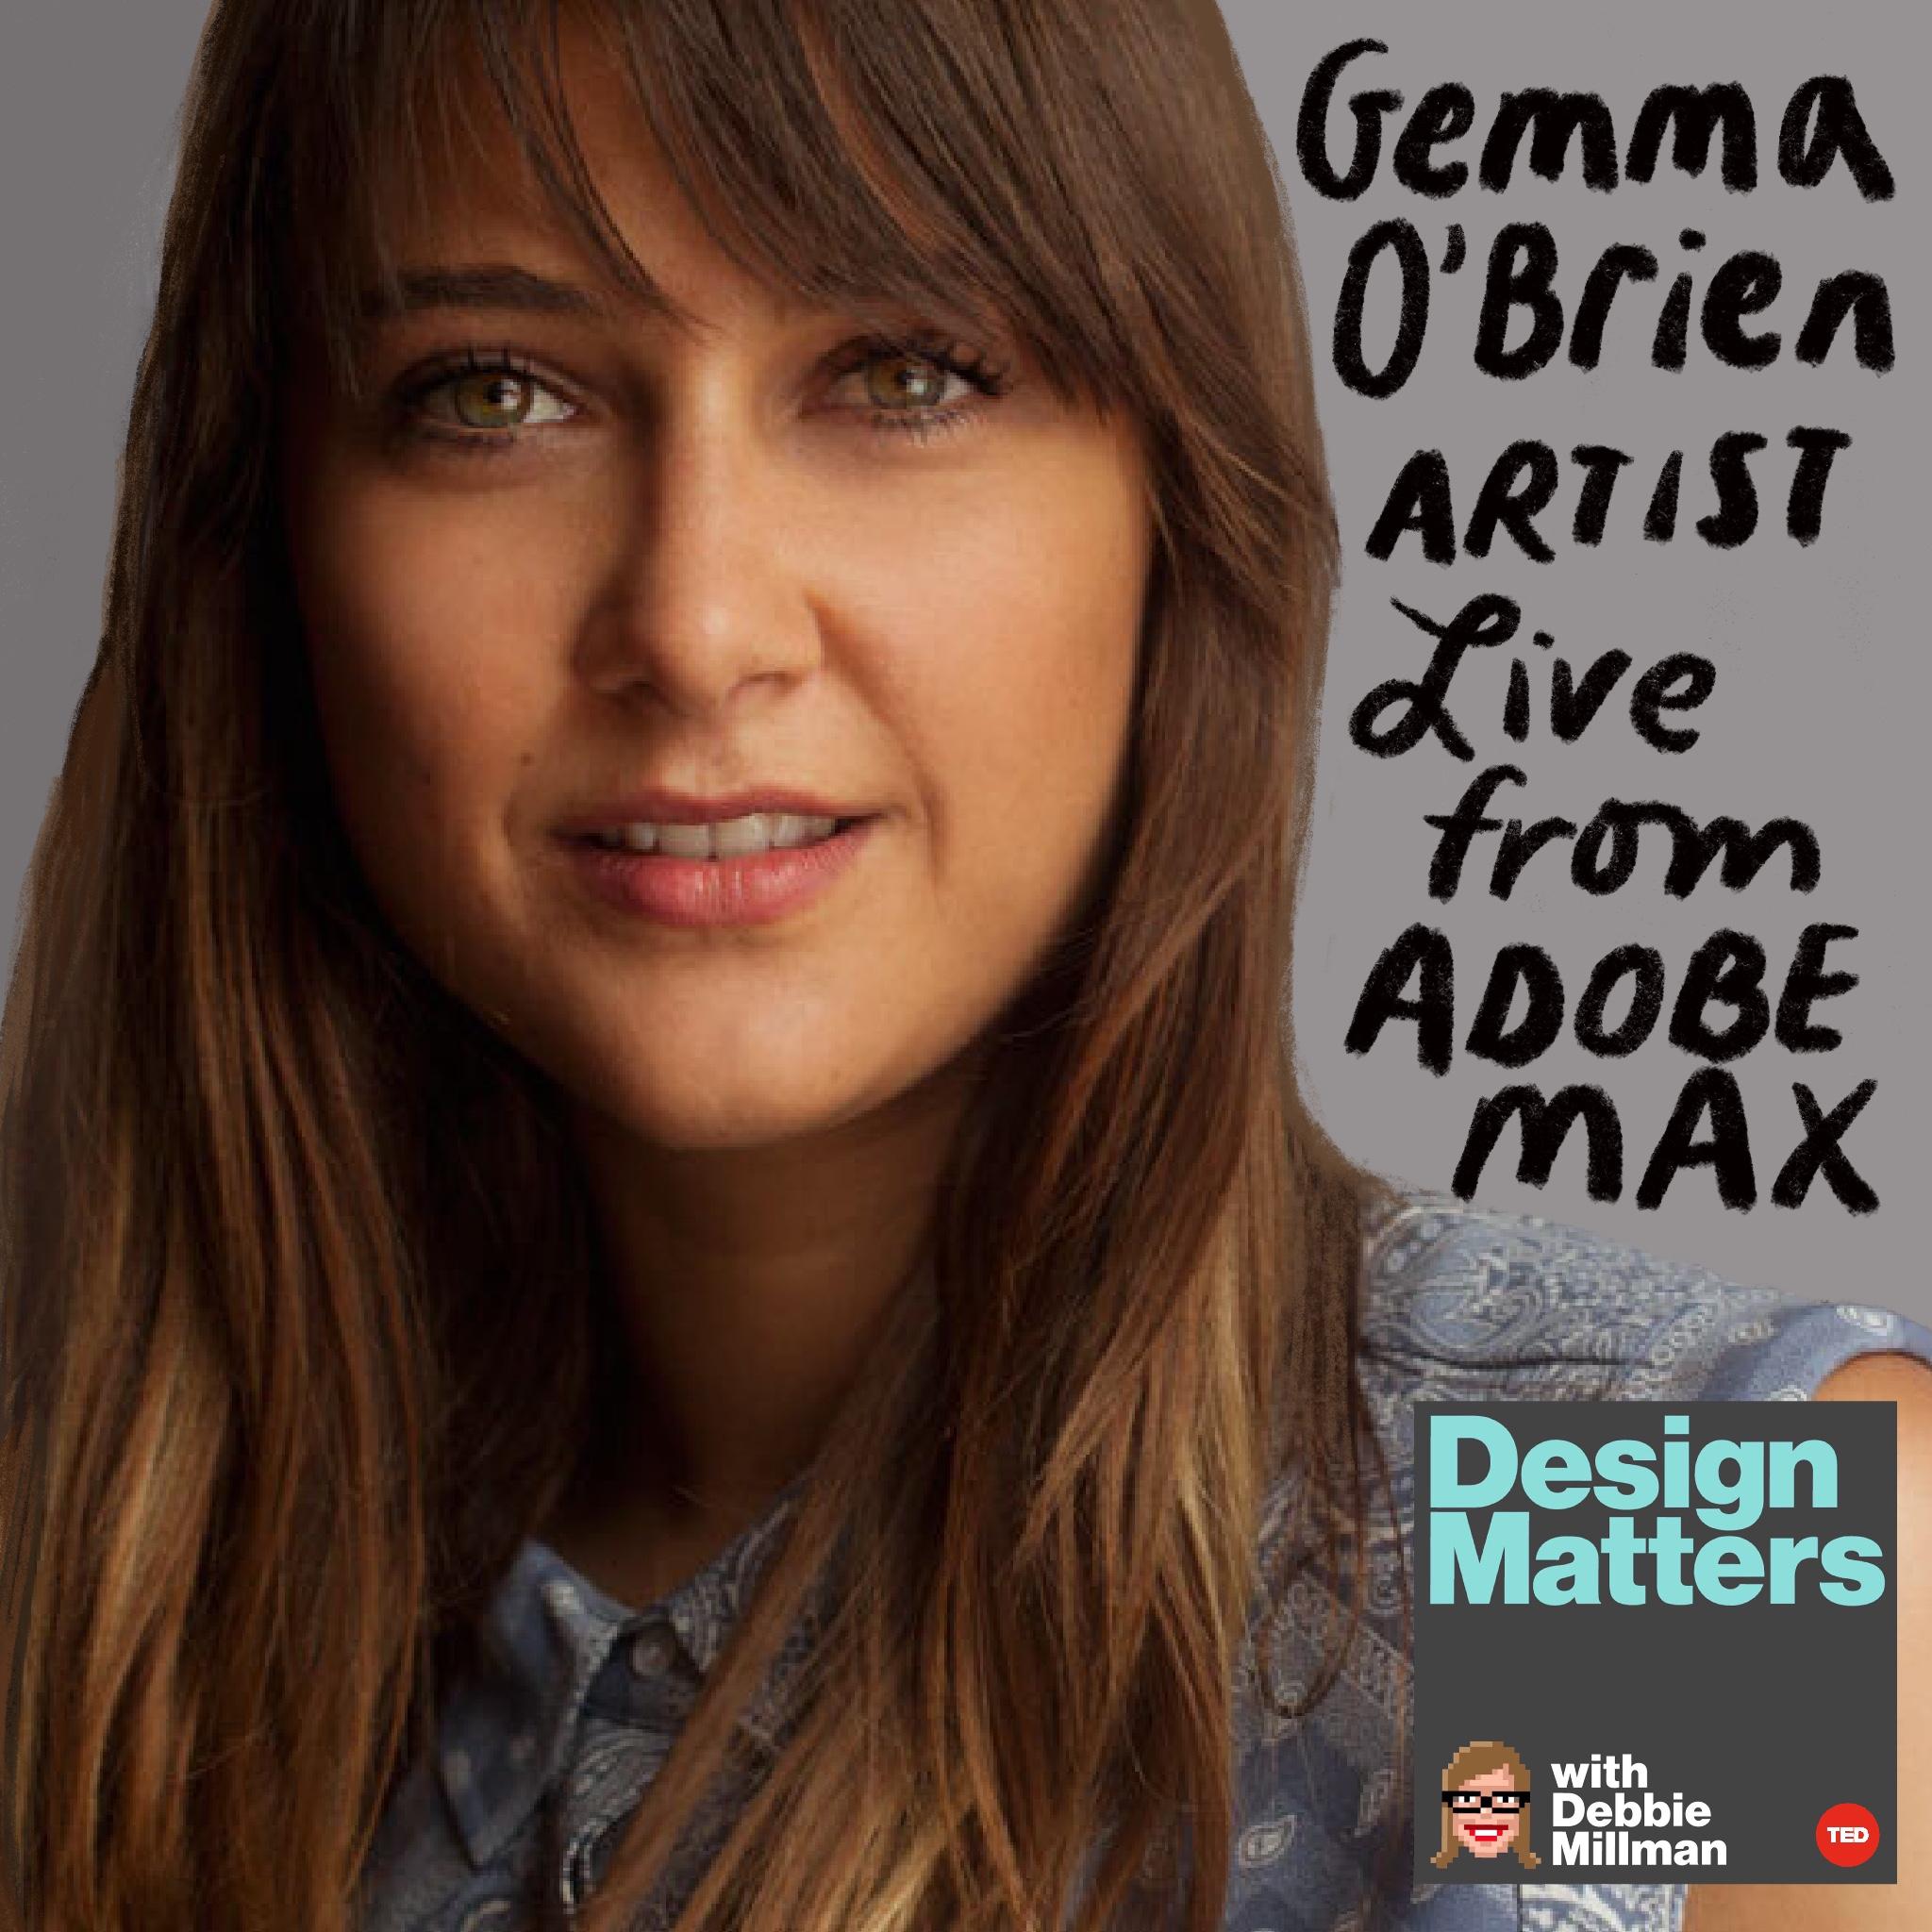 Thumbnail for "Design Matters Live: Gemma O'Brien".